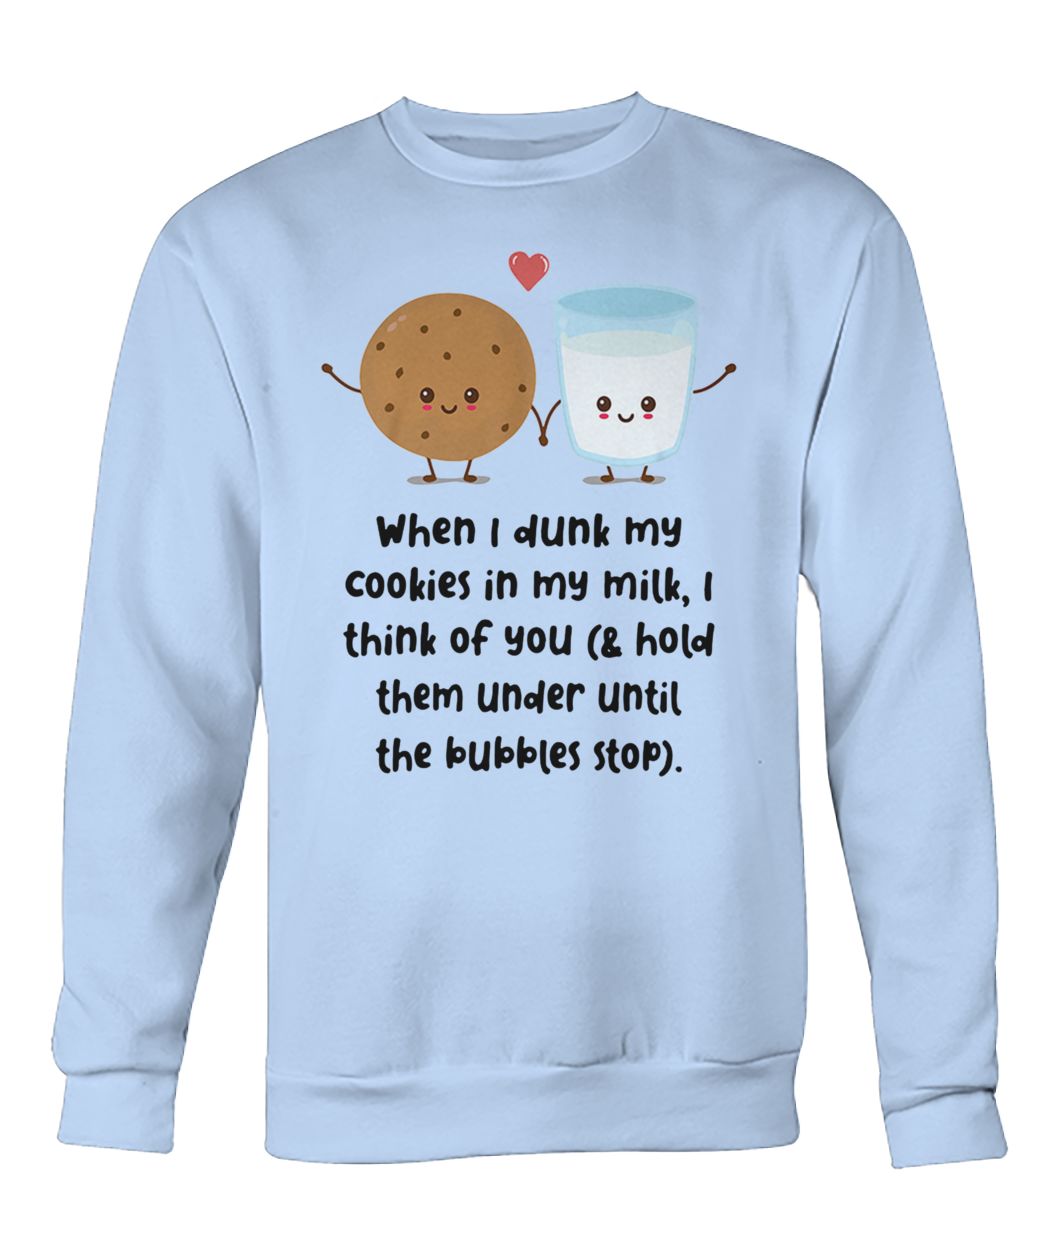 When I dunk my cookies in my milk I think of you crew neck sweatshirt